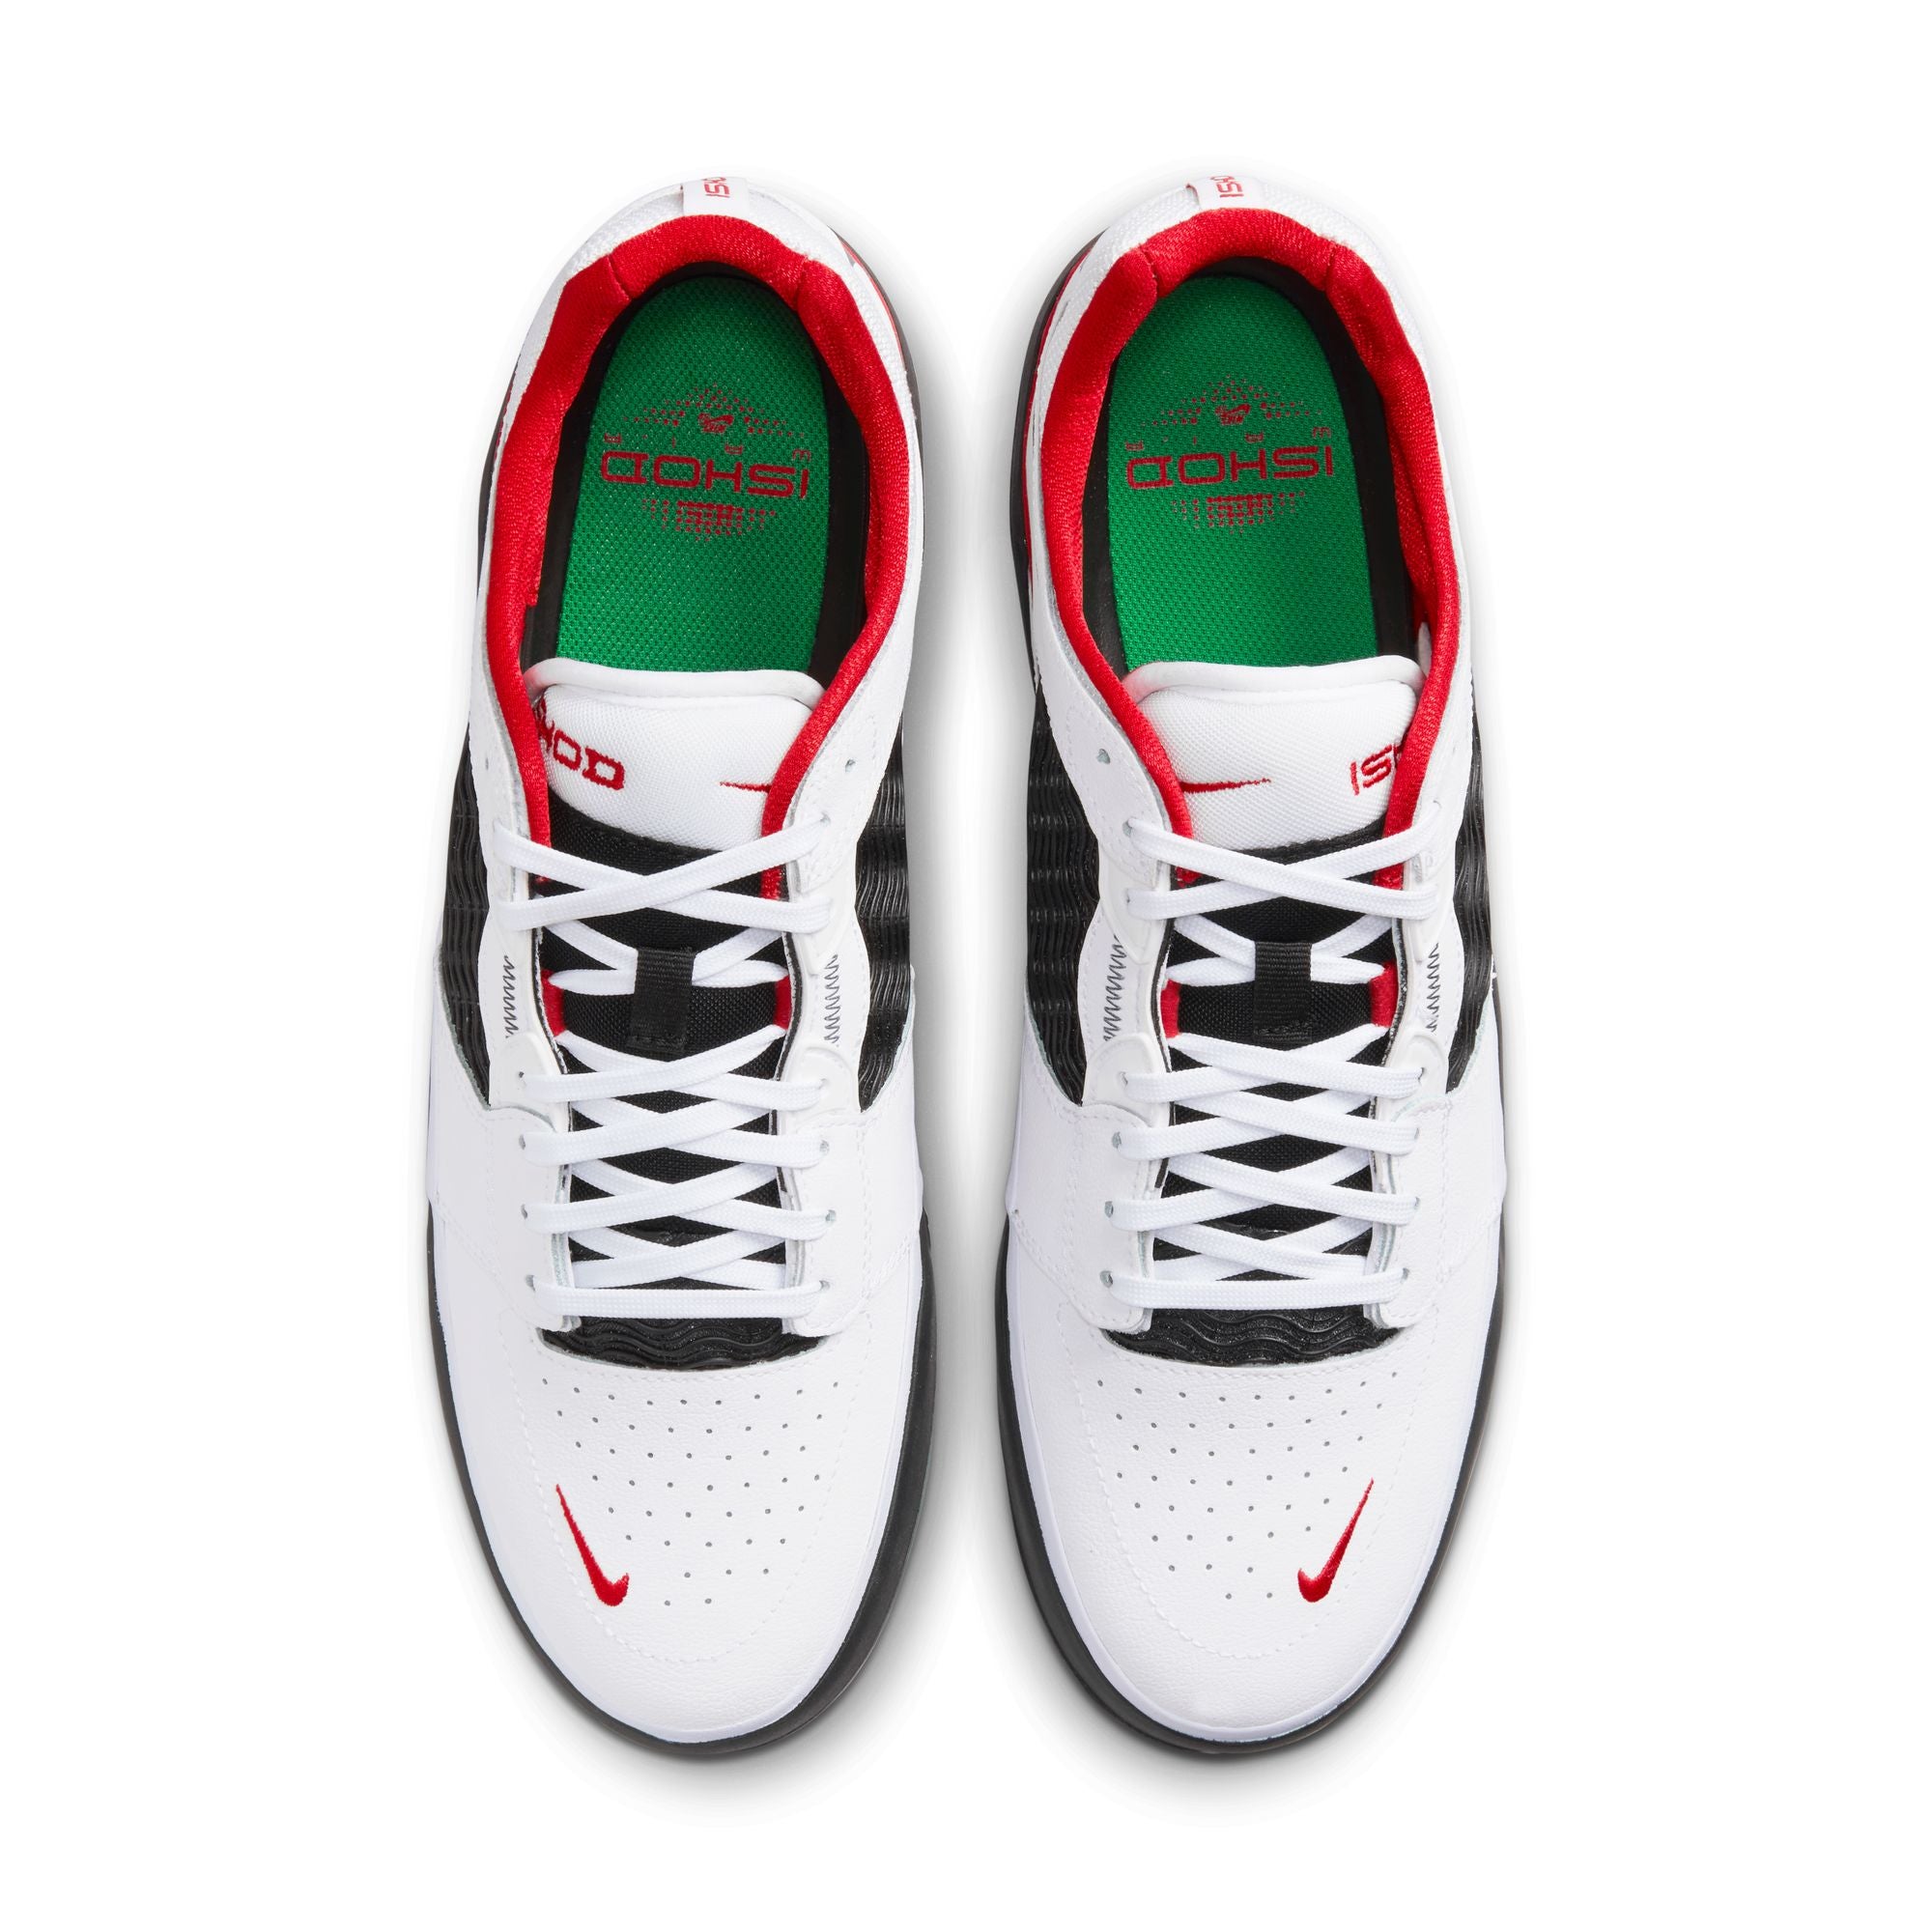 White/Black Premium Ishod Nike SB Skate Shoe Top